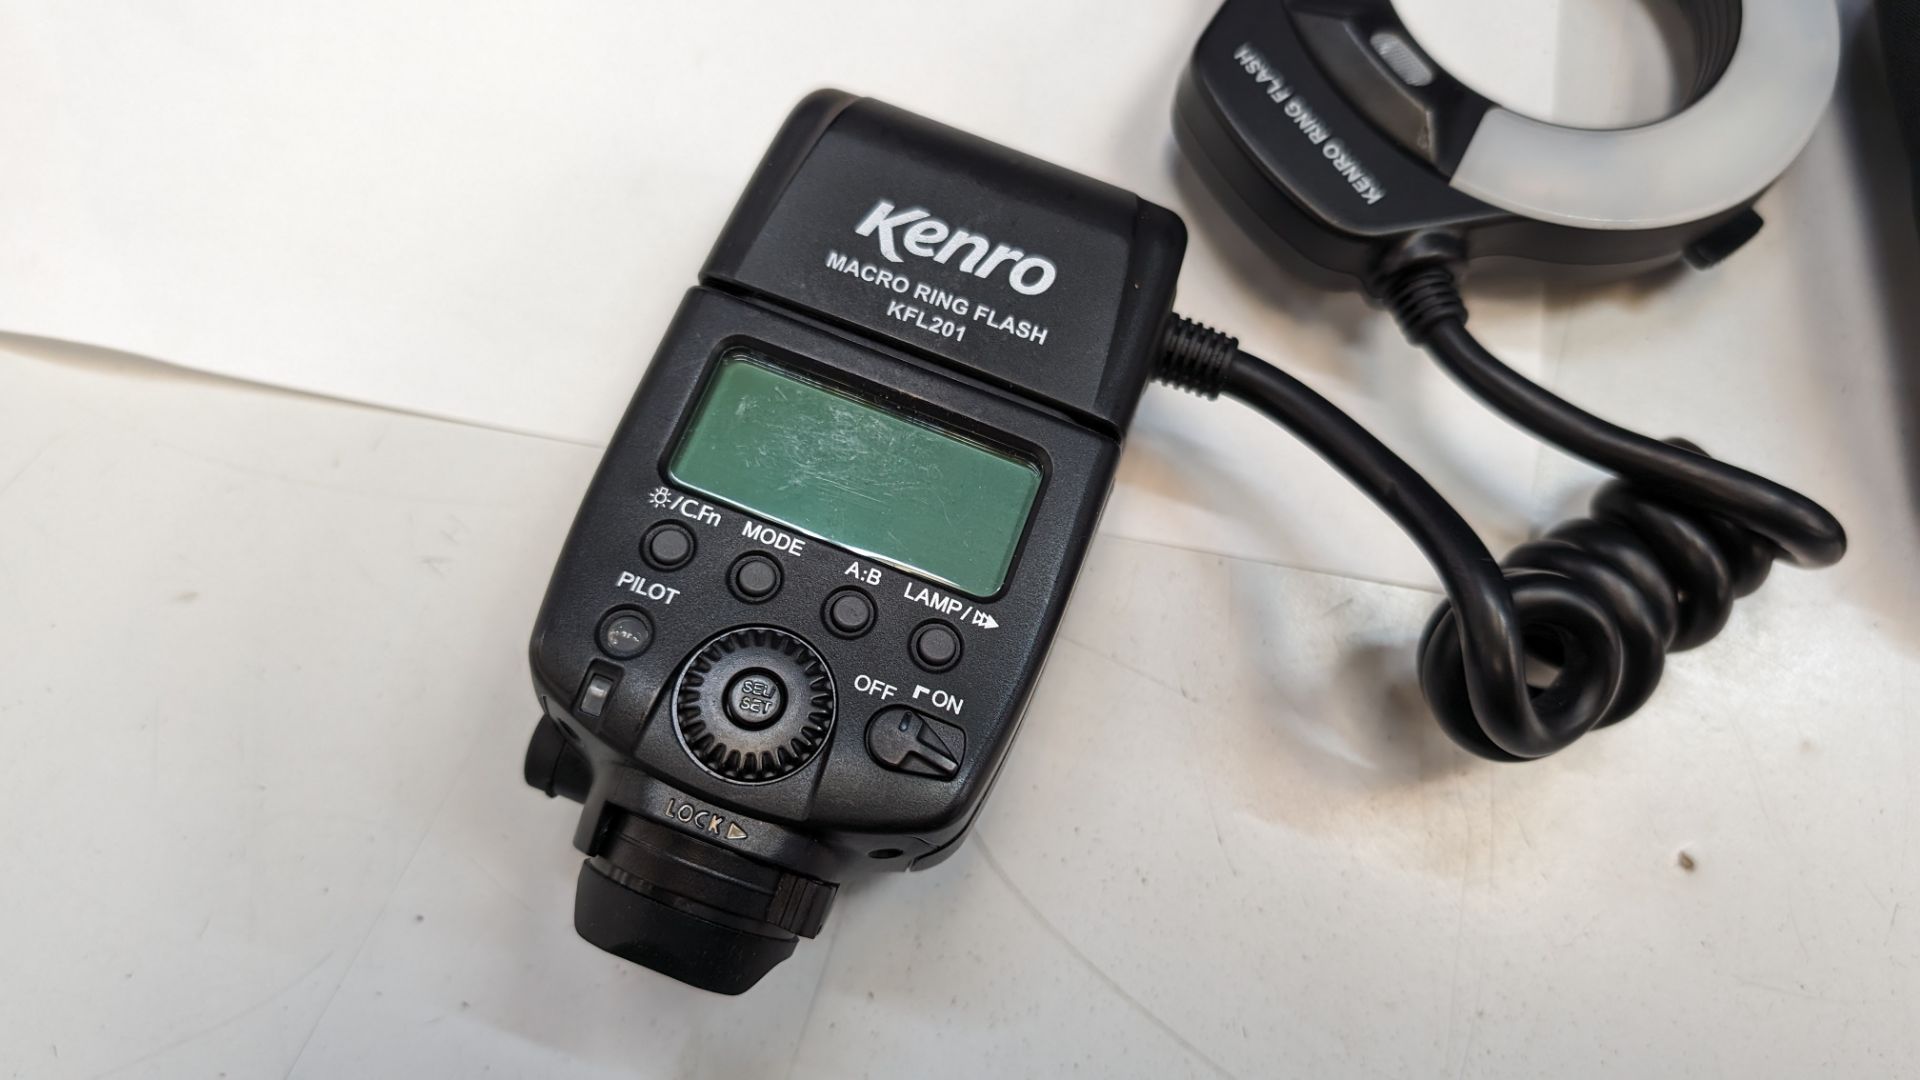 Kenro macro ring flash model KFL201 with carry bag - Image 6 of 10